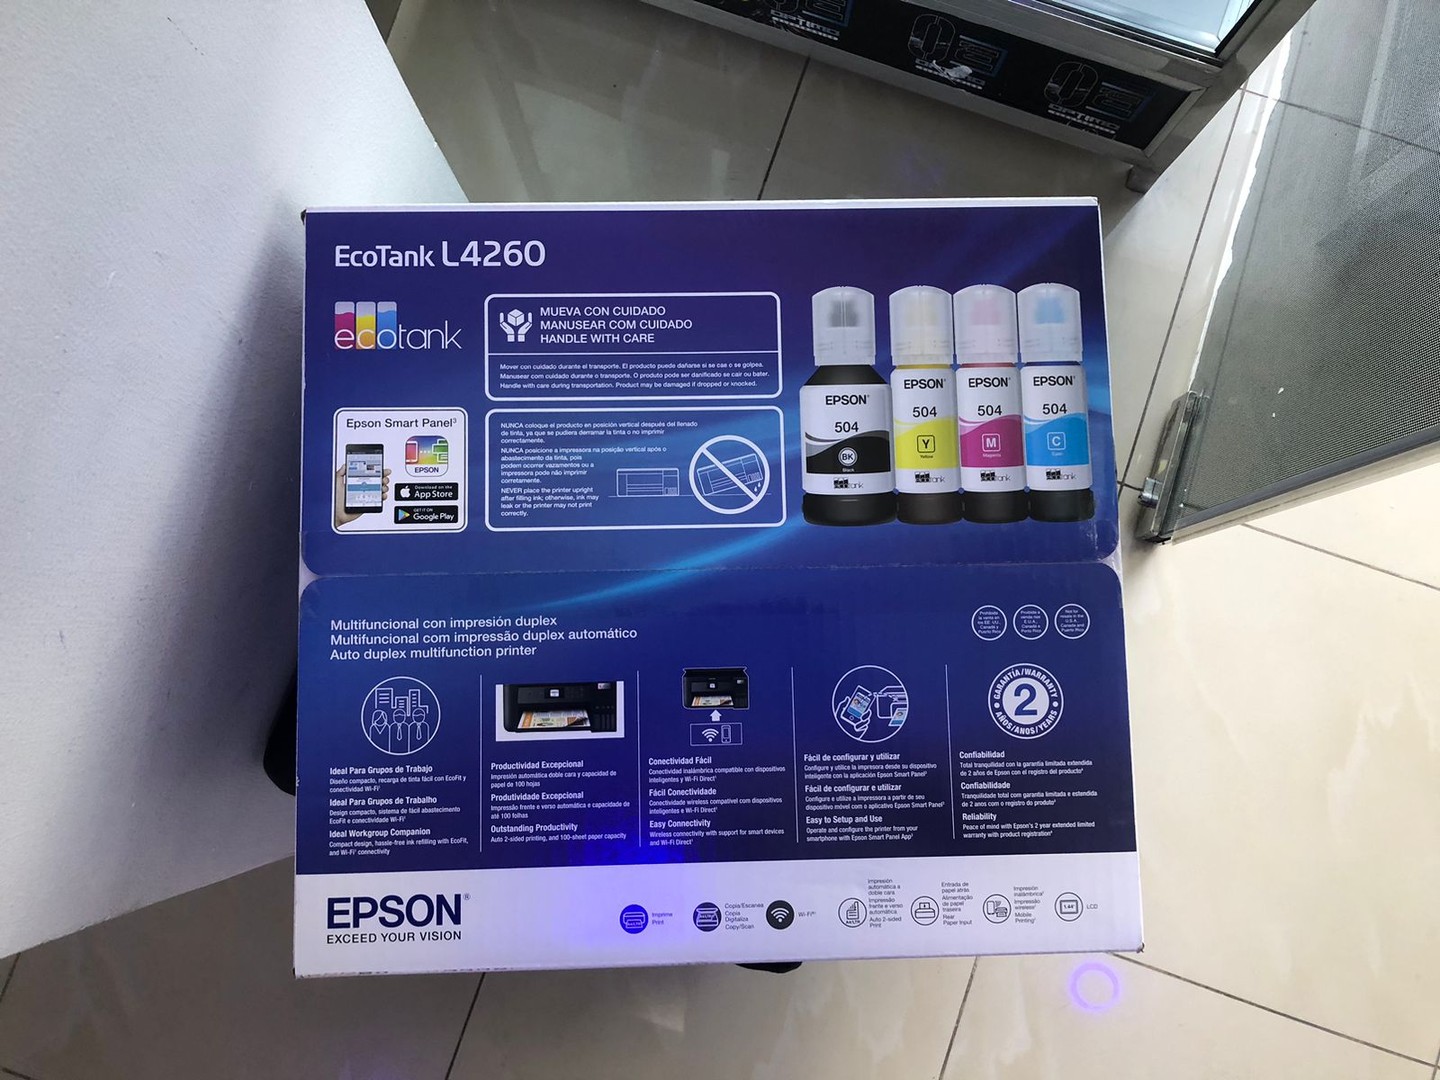 impresoras y scanners - Impresora Epson L4260 Multifuncion, Wifi y Cable USB - Pantalla LCD 3